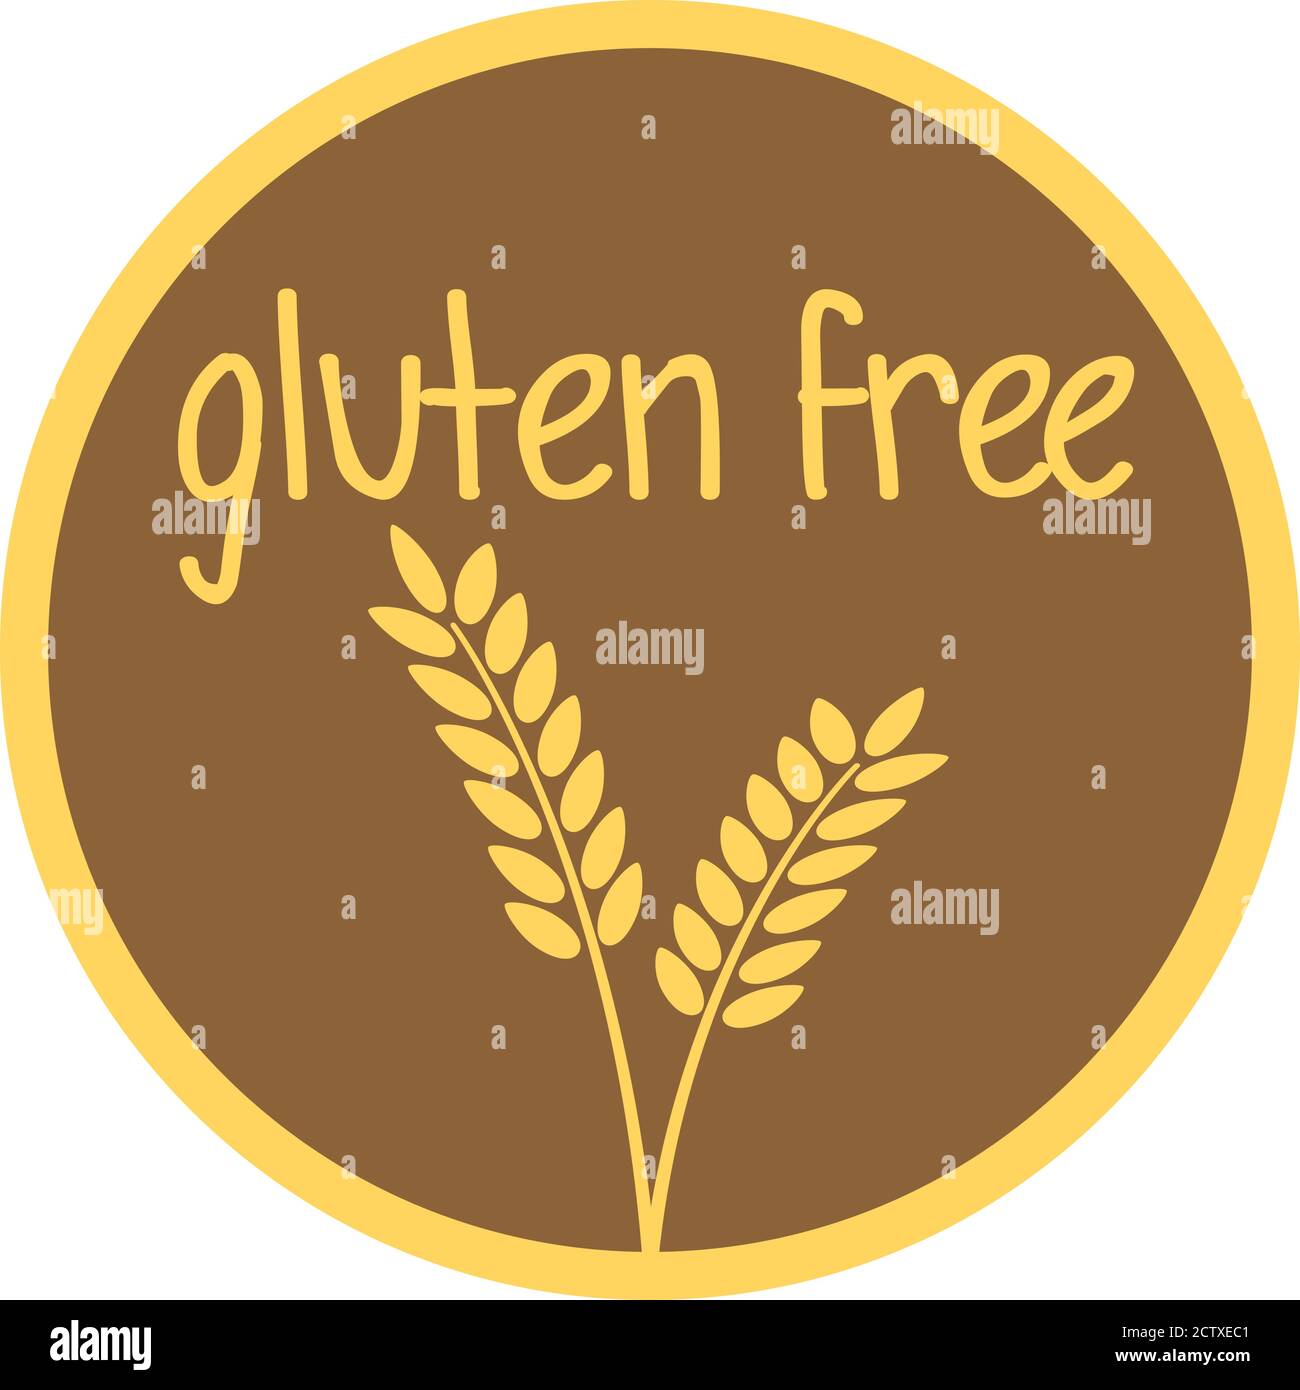 round gluten free label or sticker vector illustration Stock Vector